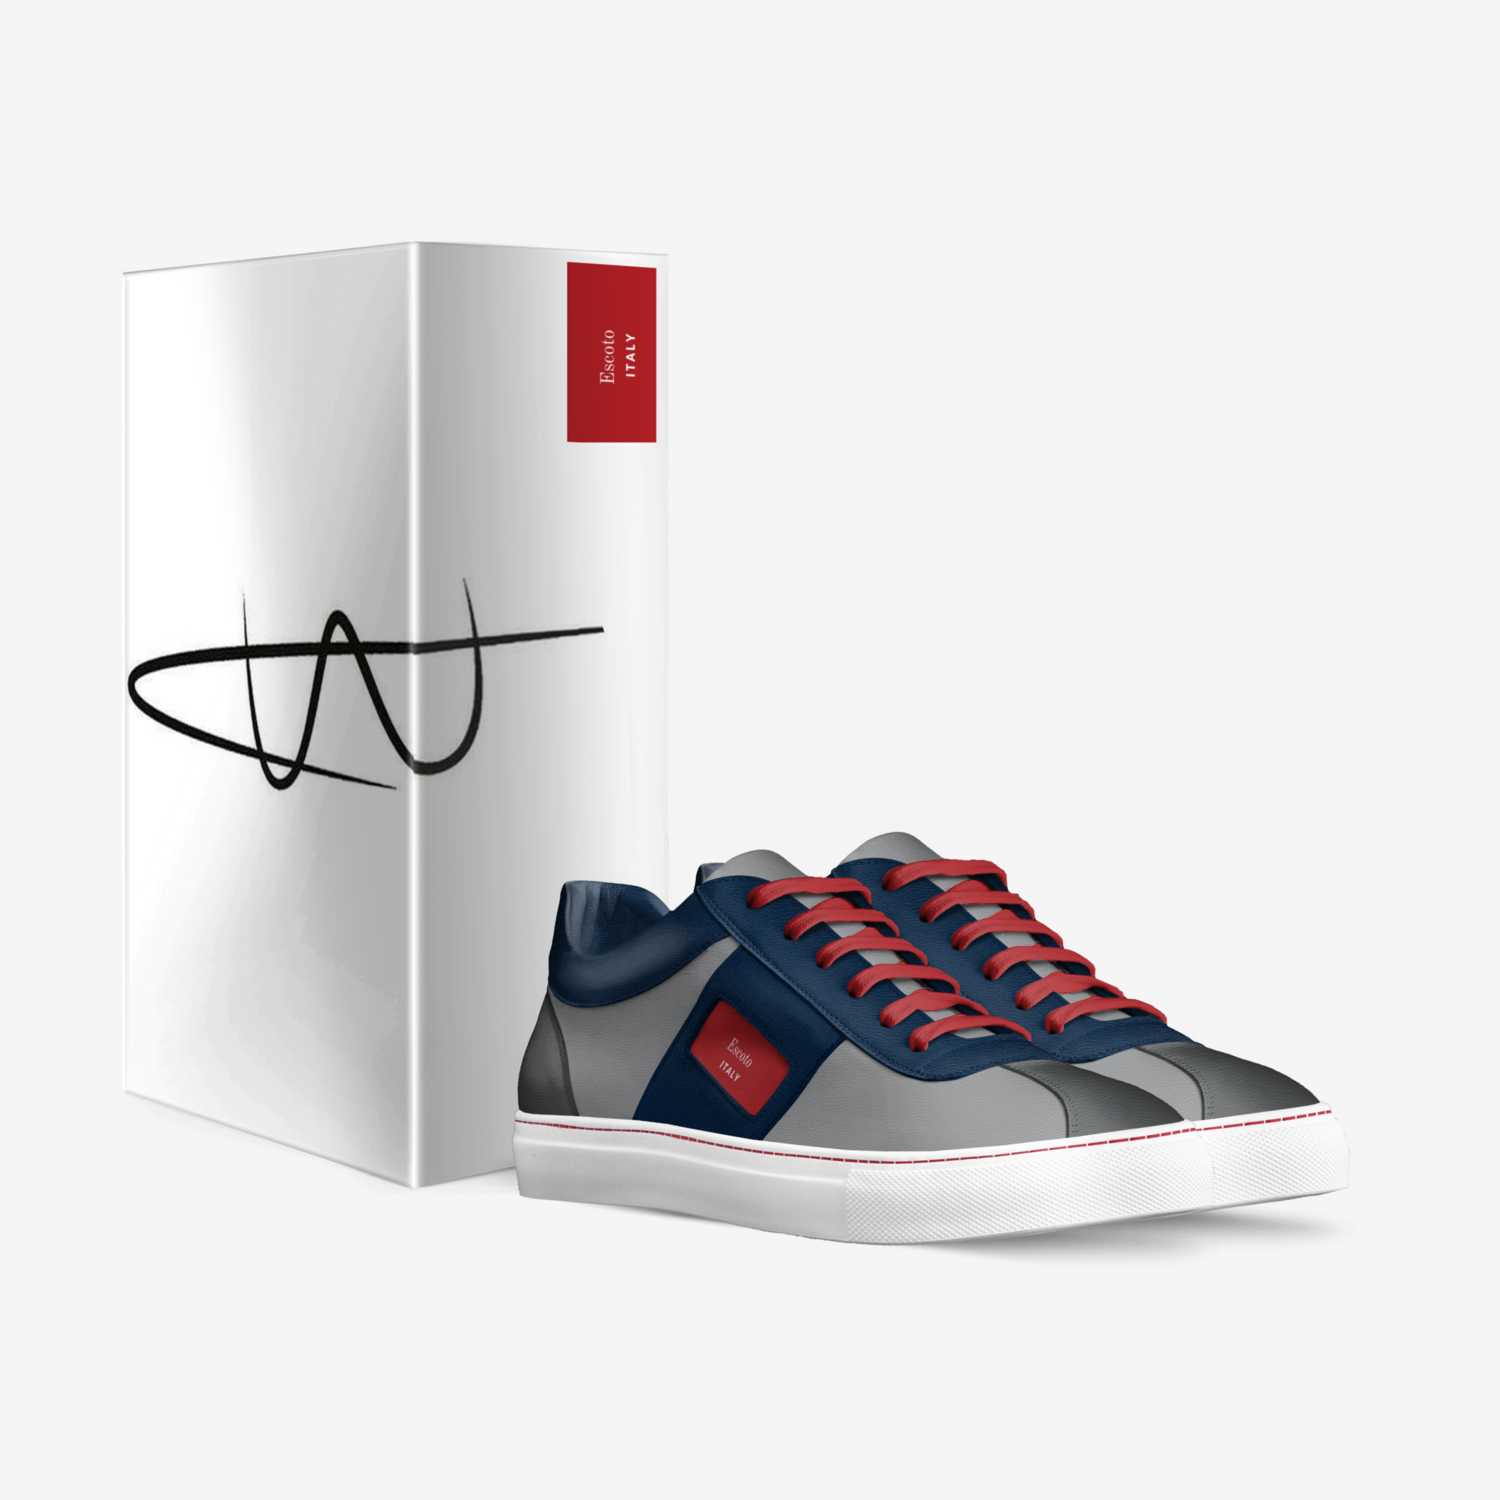 Escoto  custom made in Italy shoes by Adrian Escoto | Box view